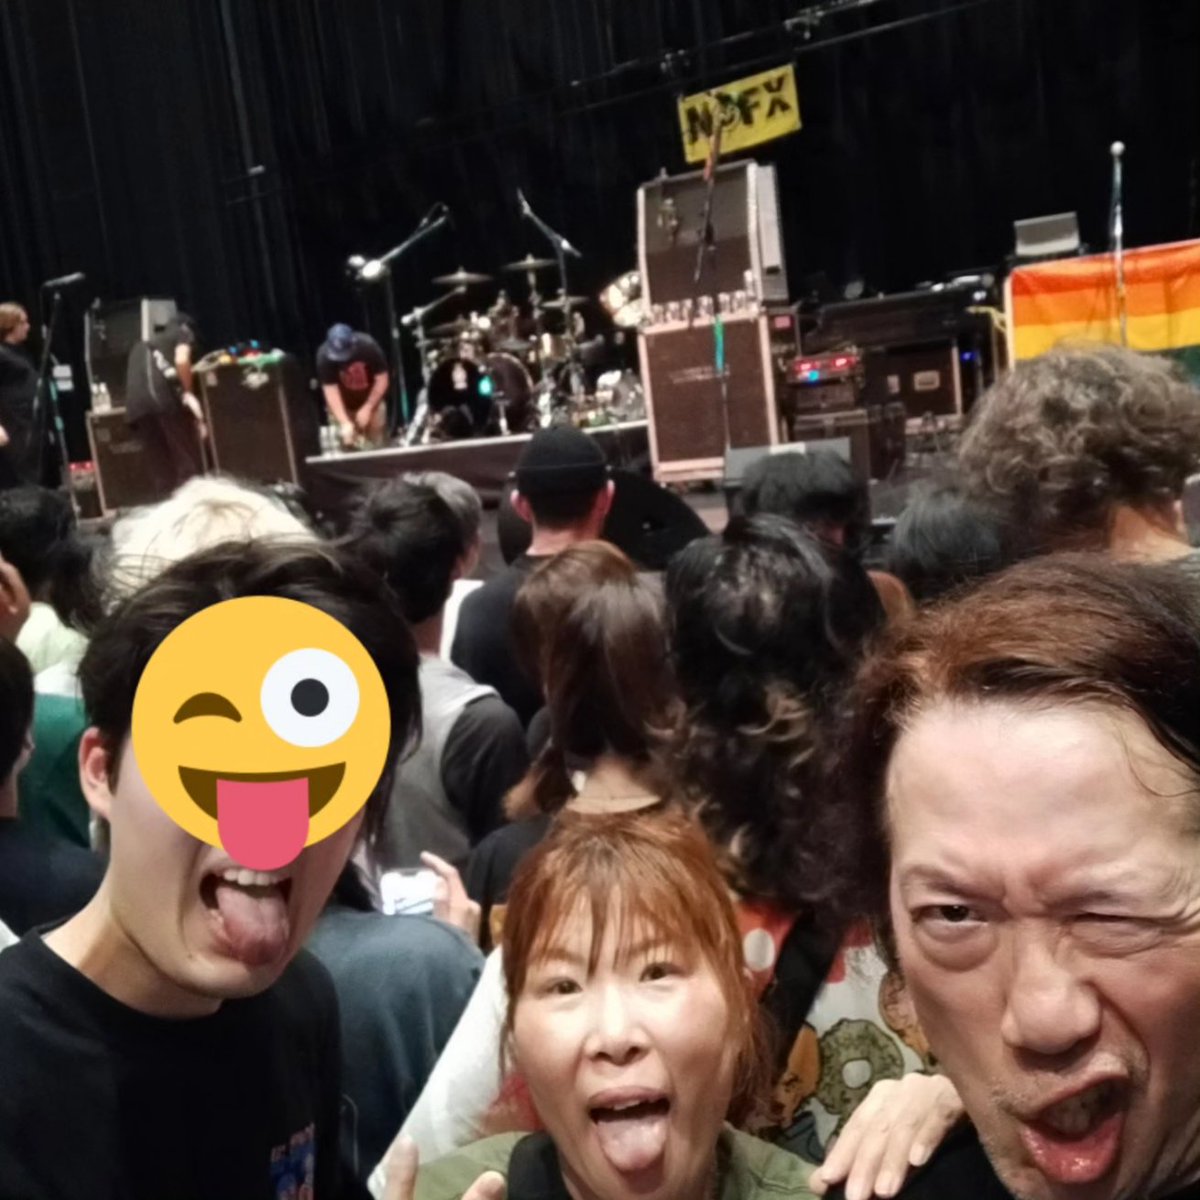 NOFX / THE FINAL JAPAN TOUR day2
@ Zepp Osaka Bayside
Mar.14.2024
Special Guest: Hi-STANDARD

今日(昨日ですが)もNOFX最高！

 #nofx  #hi_standard  #histandard  #ノーエフ #ハイスタ  #zepposakabayside  #fatwreckchords  #fatwreck  #punkrock  #punk  #punkspring
instagram.com/p/C4iKMozSM_q/…